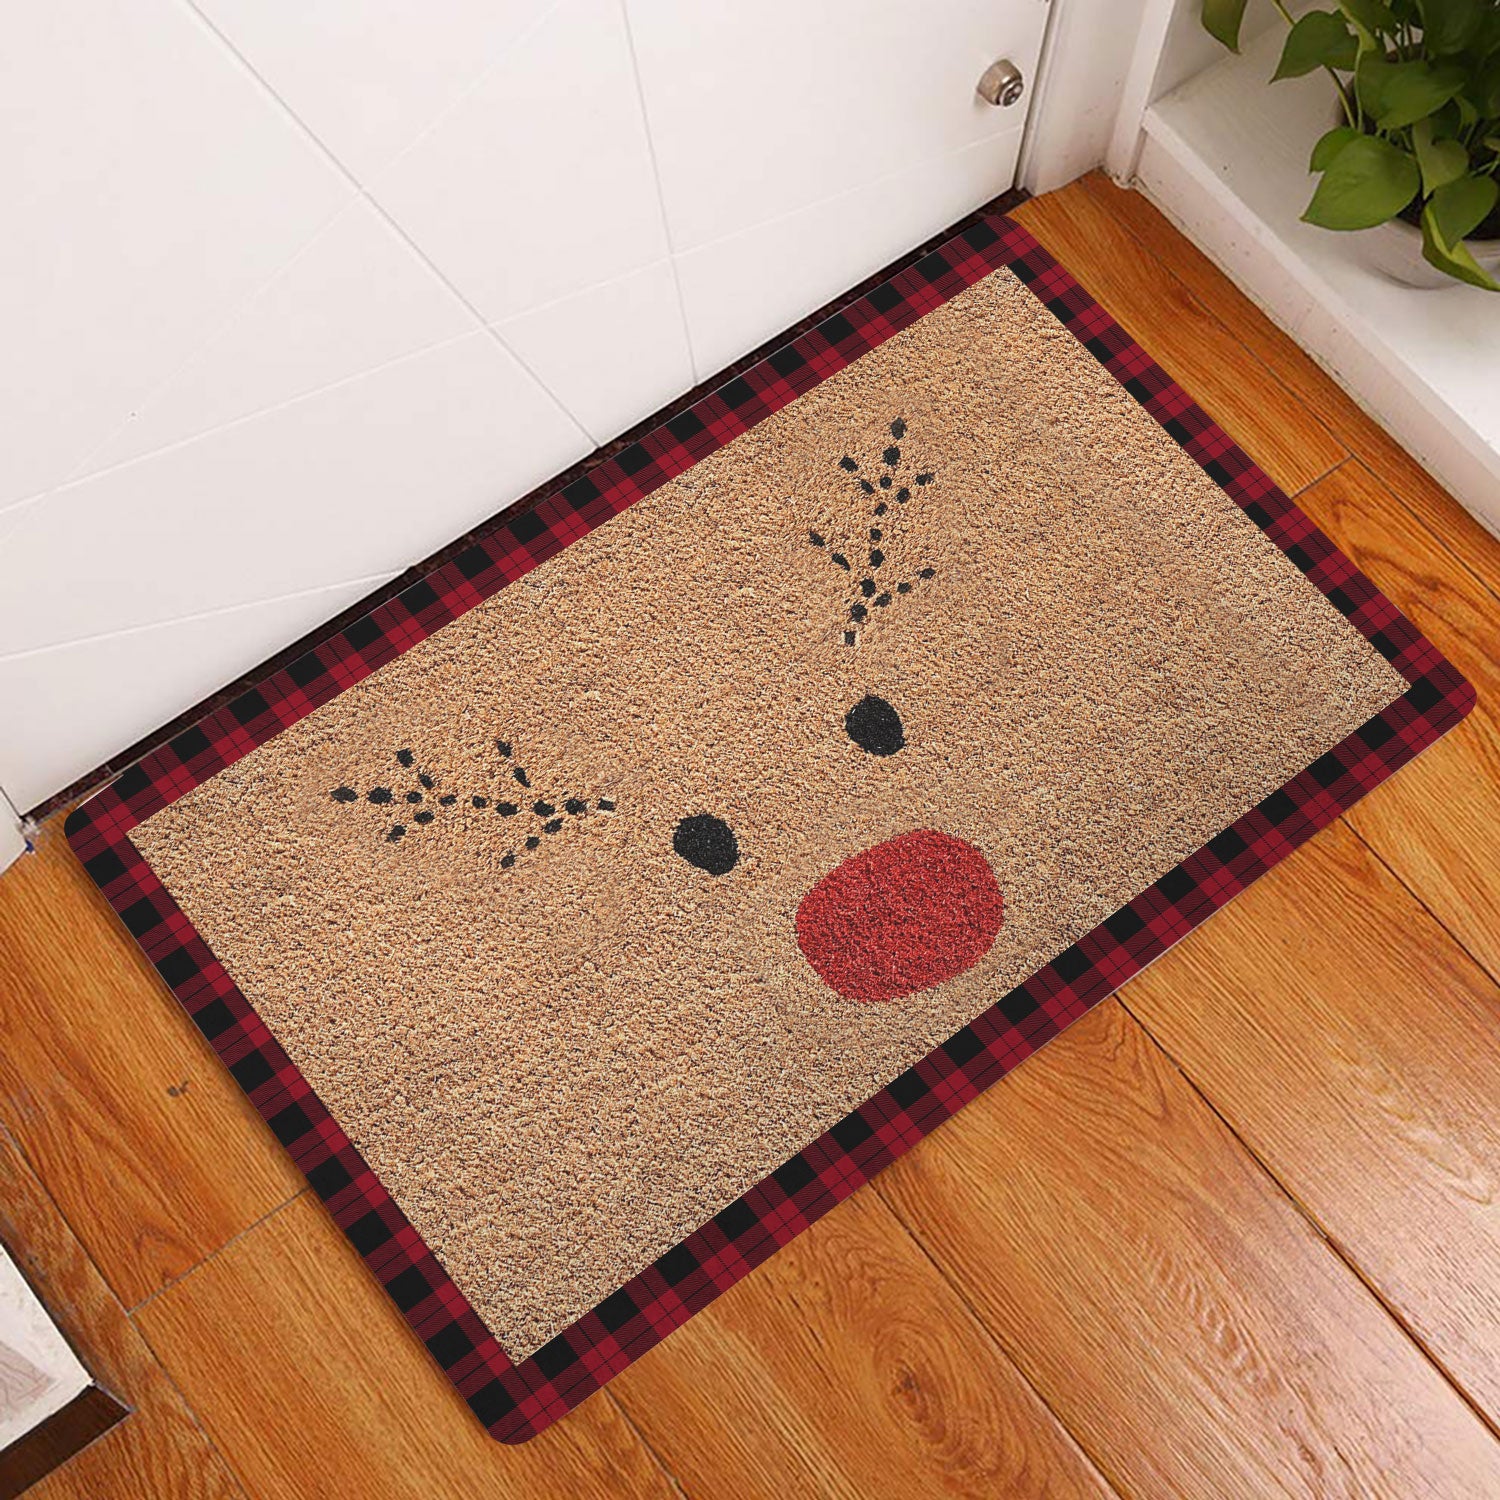 Ohaprints-Doormat-Outdoor-Indoor-Merrry-Christmas-Cute-Rudolph-Red-Buffalo-Plaid-Xmas-Holiday-Rubber-Door-Mat-2012-